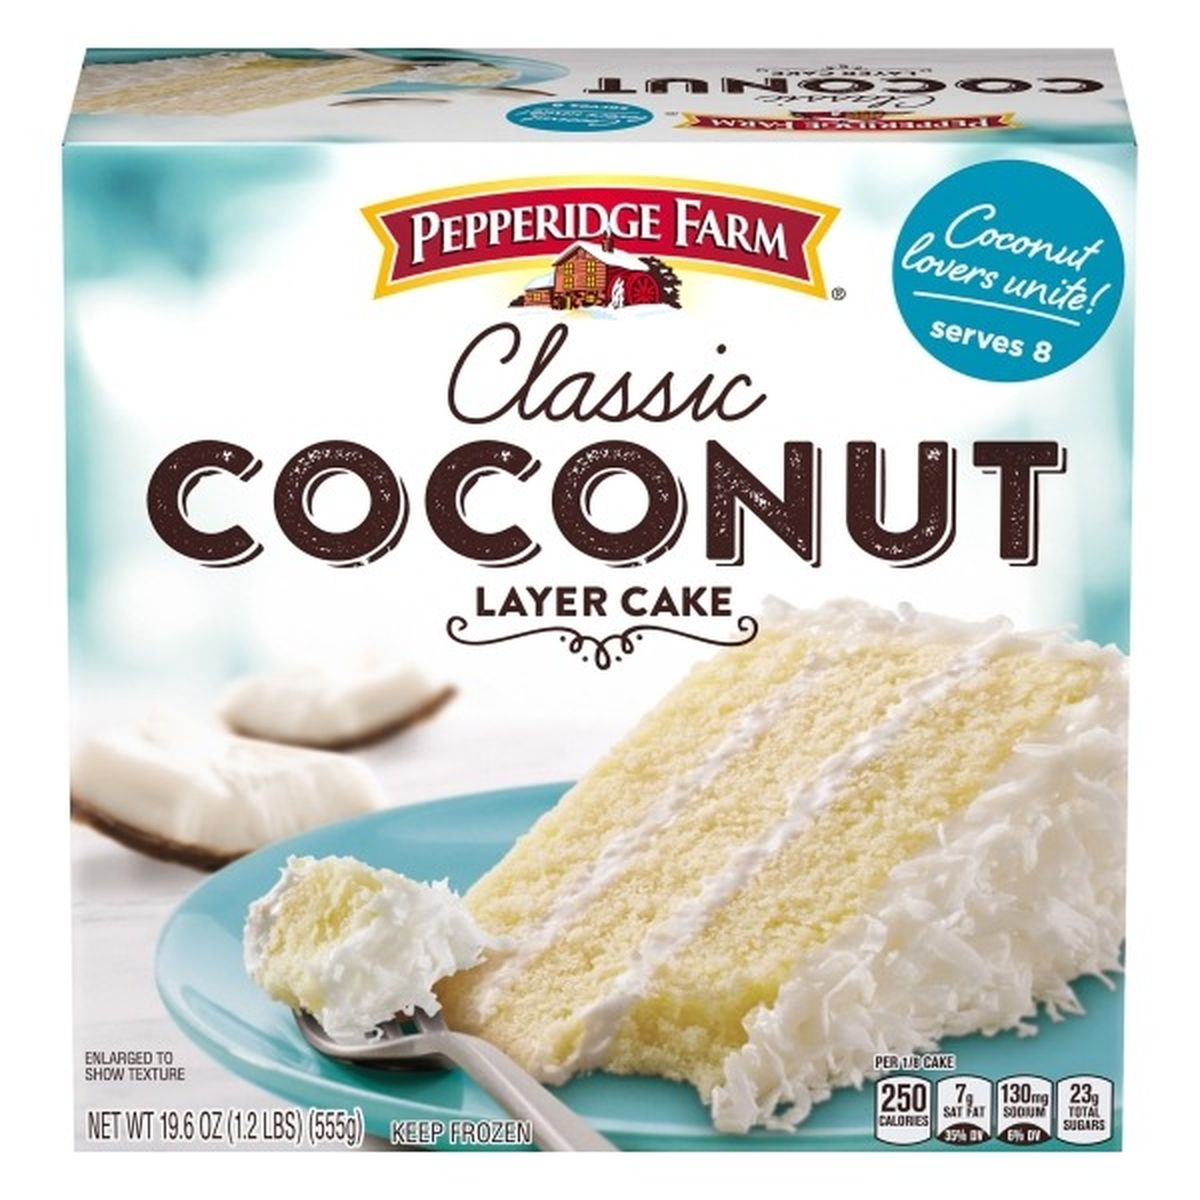 Calories in Pepperidge Farms  Layer Cake, Classic Coconut